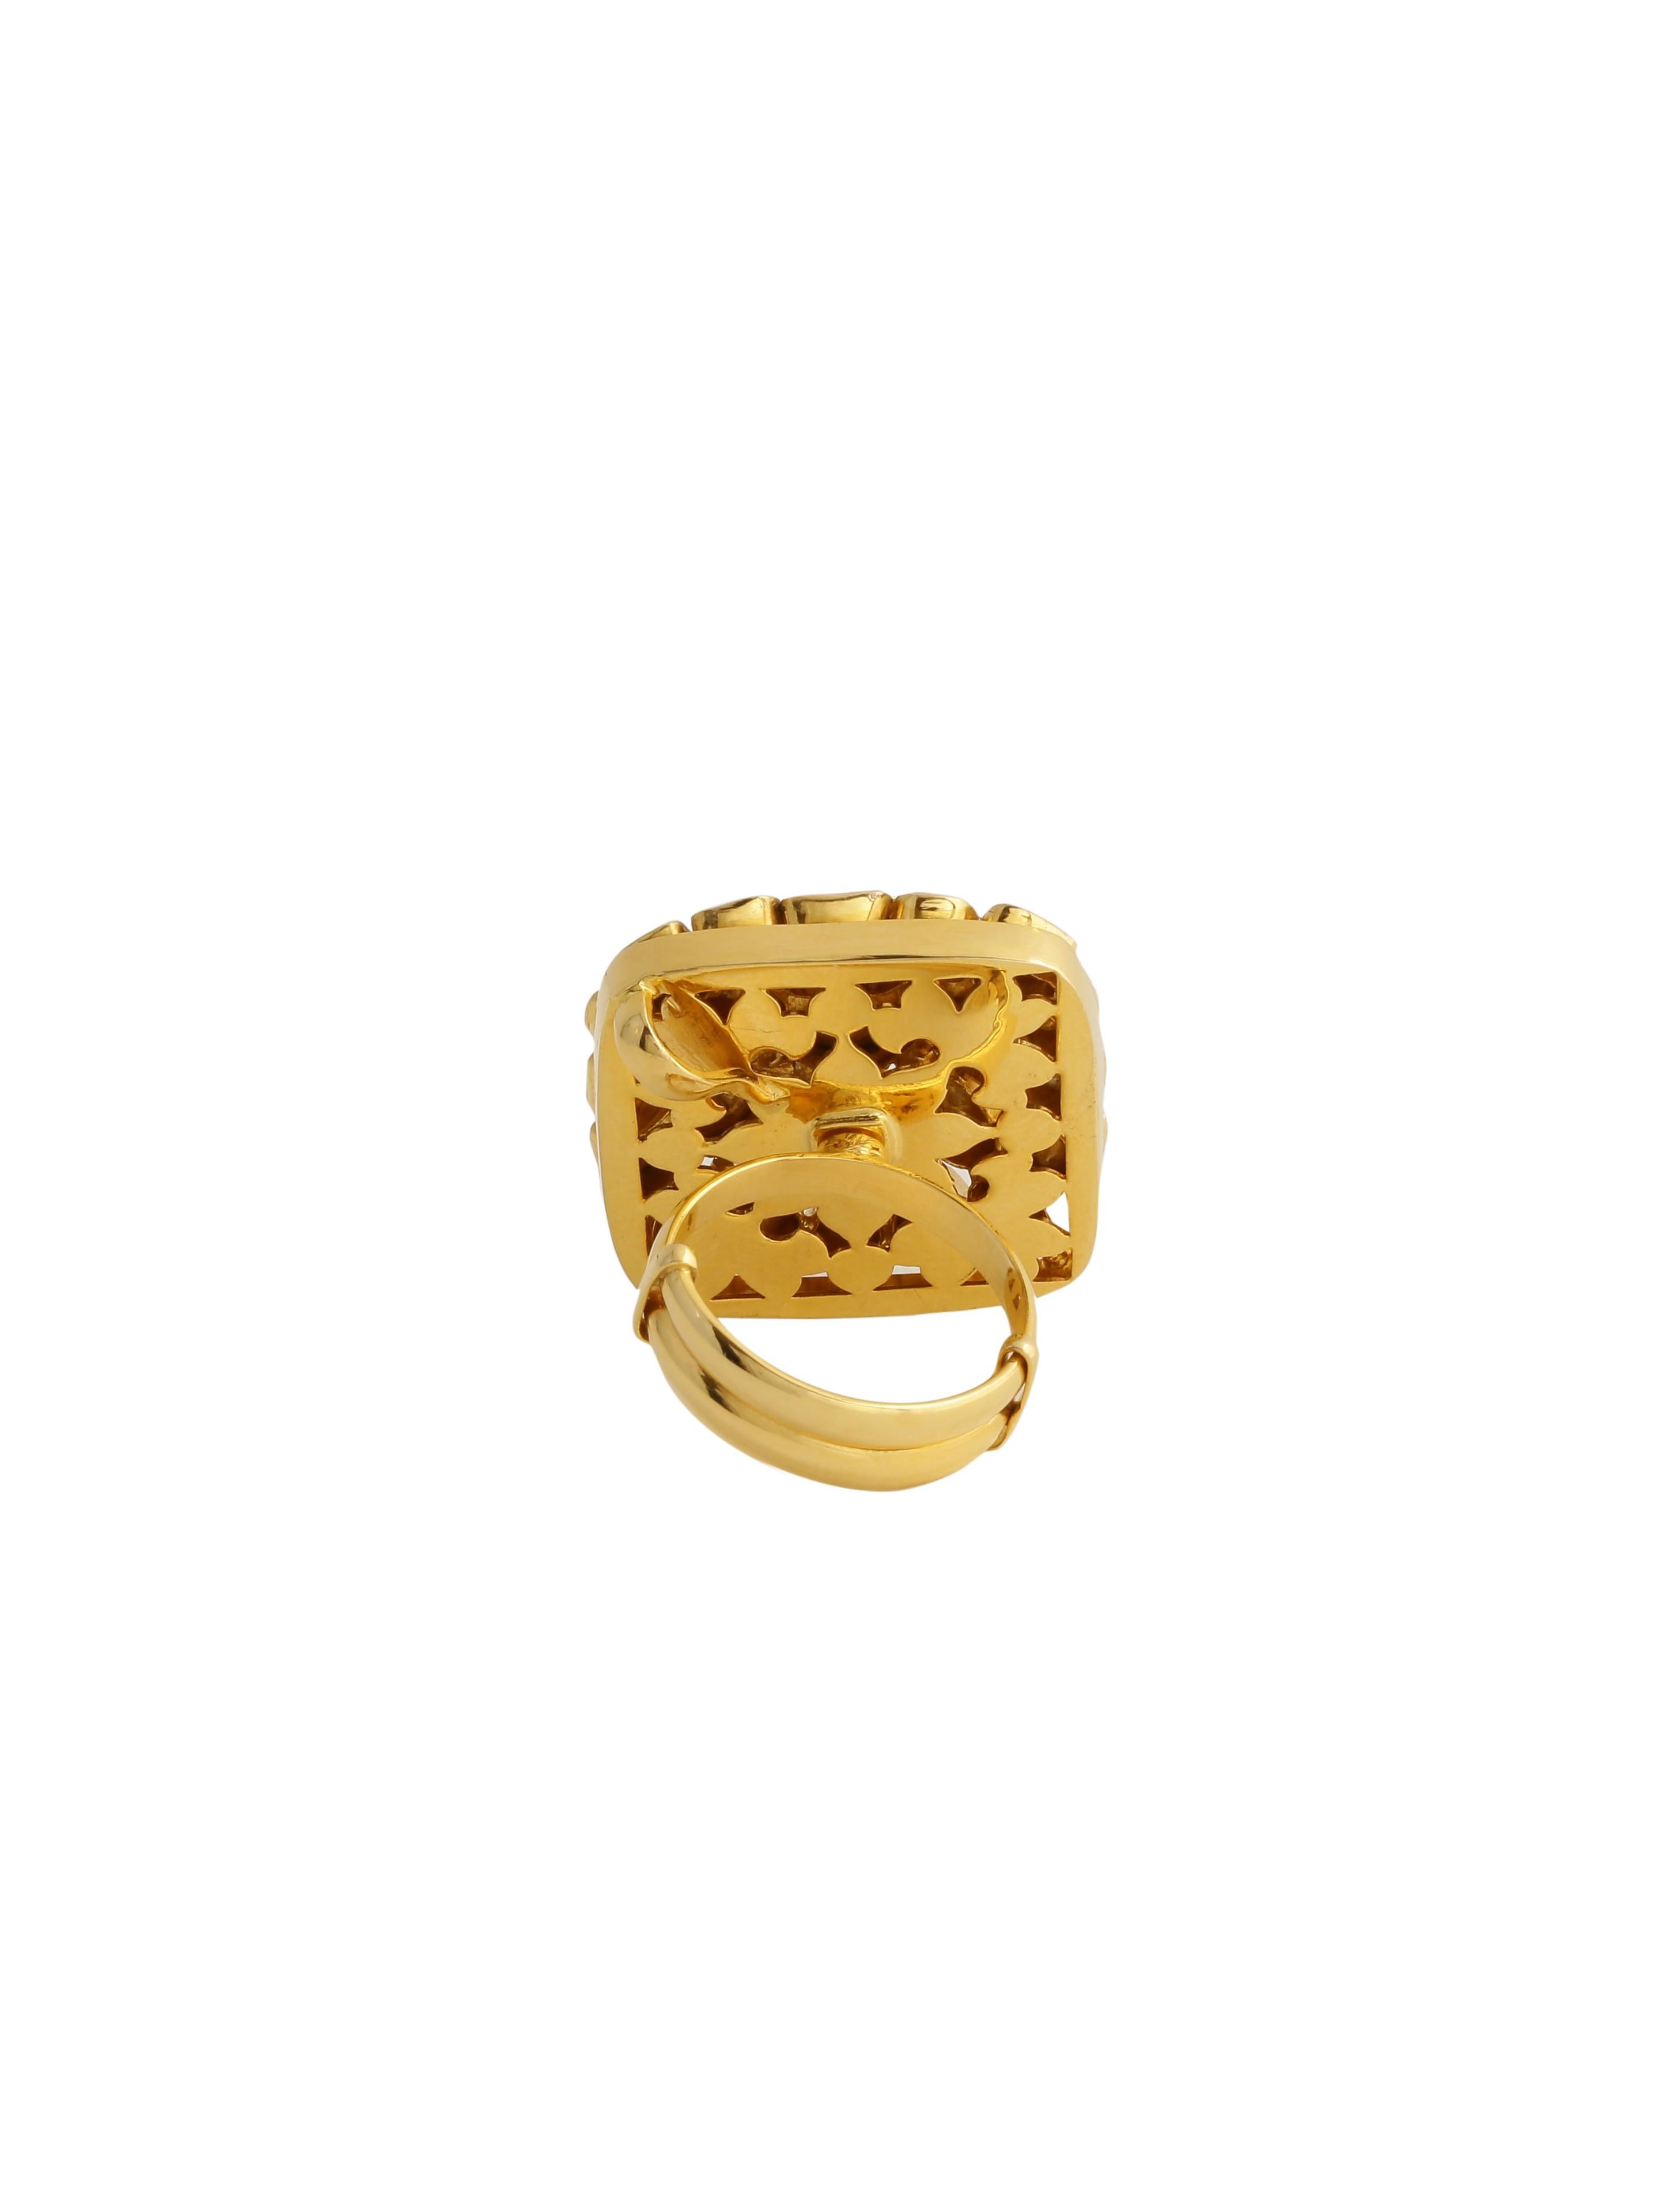 Diamond Statement Ring Cum Pendant Handcrafted in 14k Gold 4